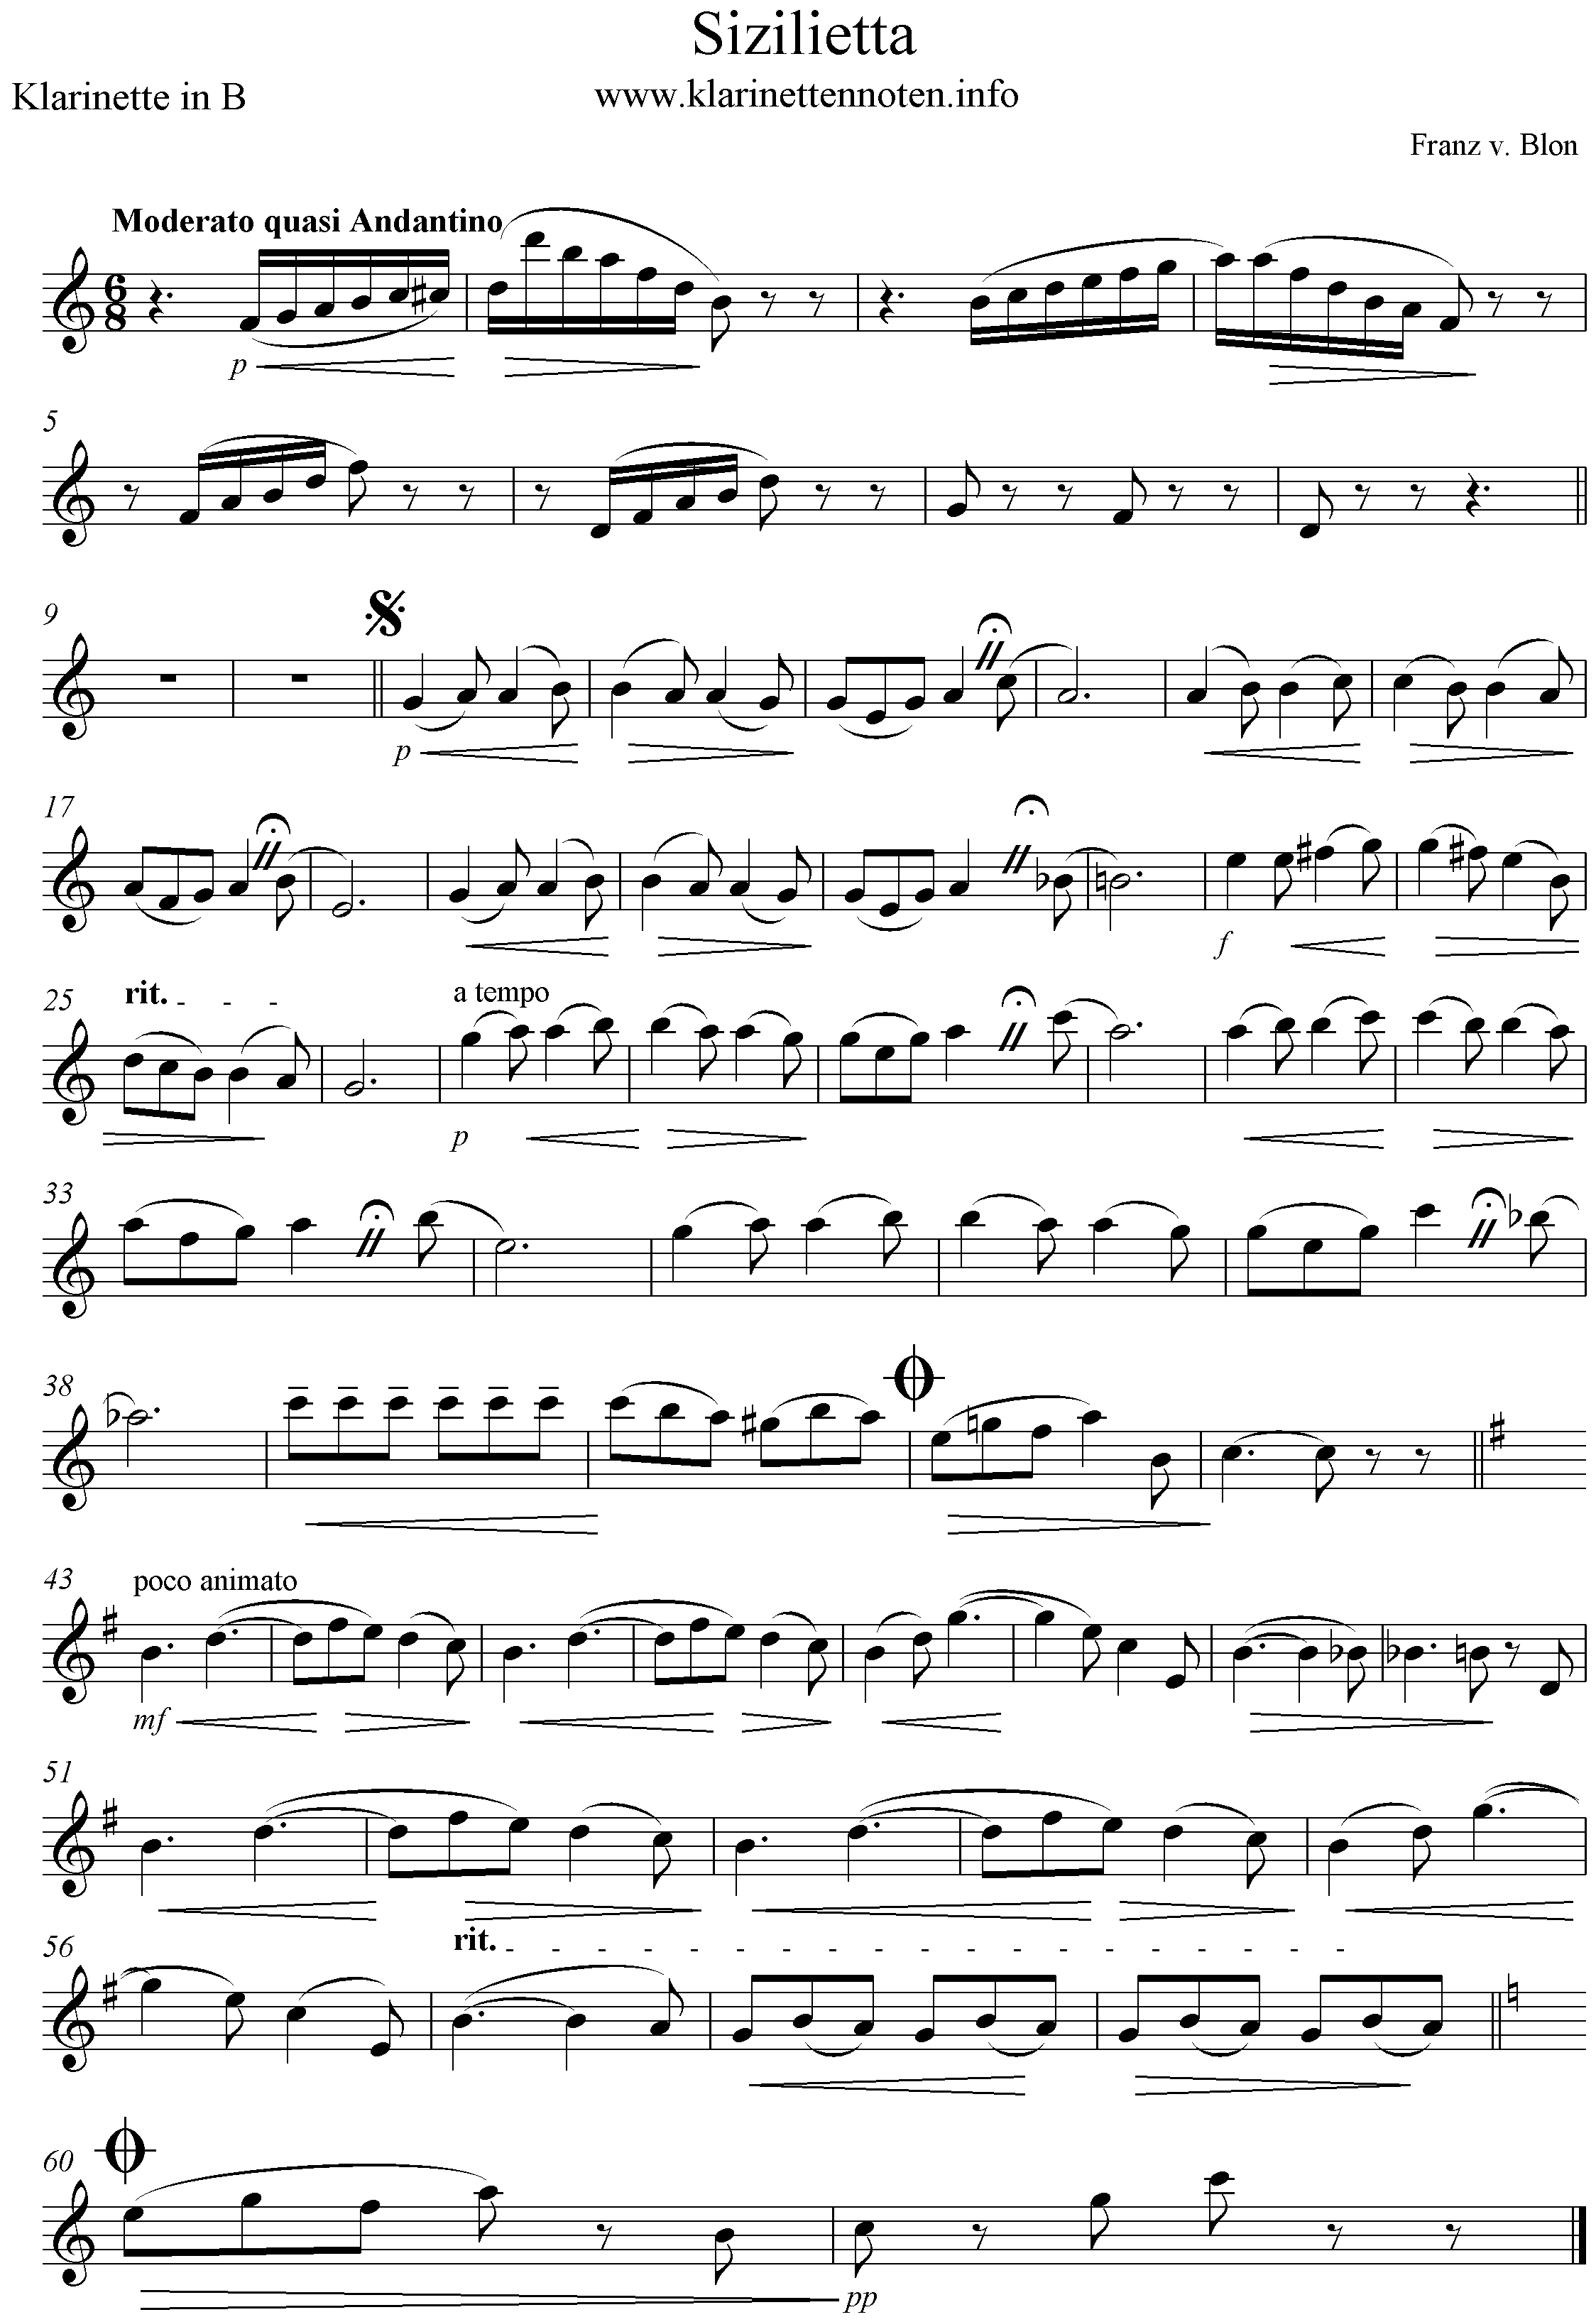 Sizilietta, Franz v Blon Clarinete, Klarinette